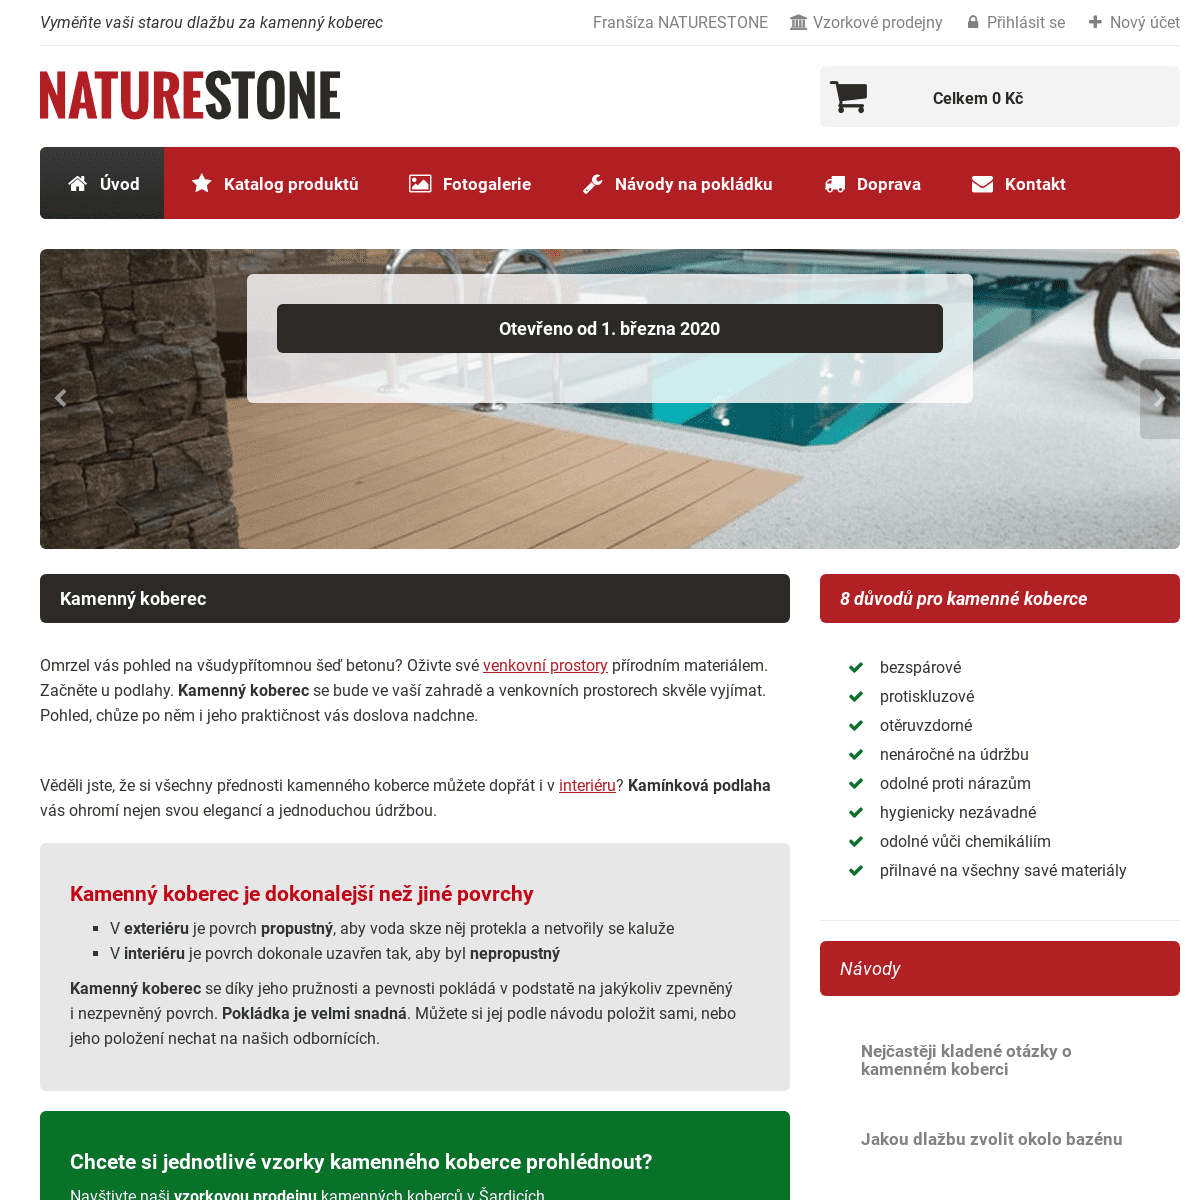 A complete backup of naturestone.cz